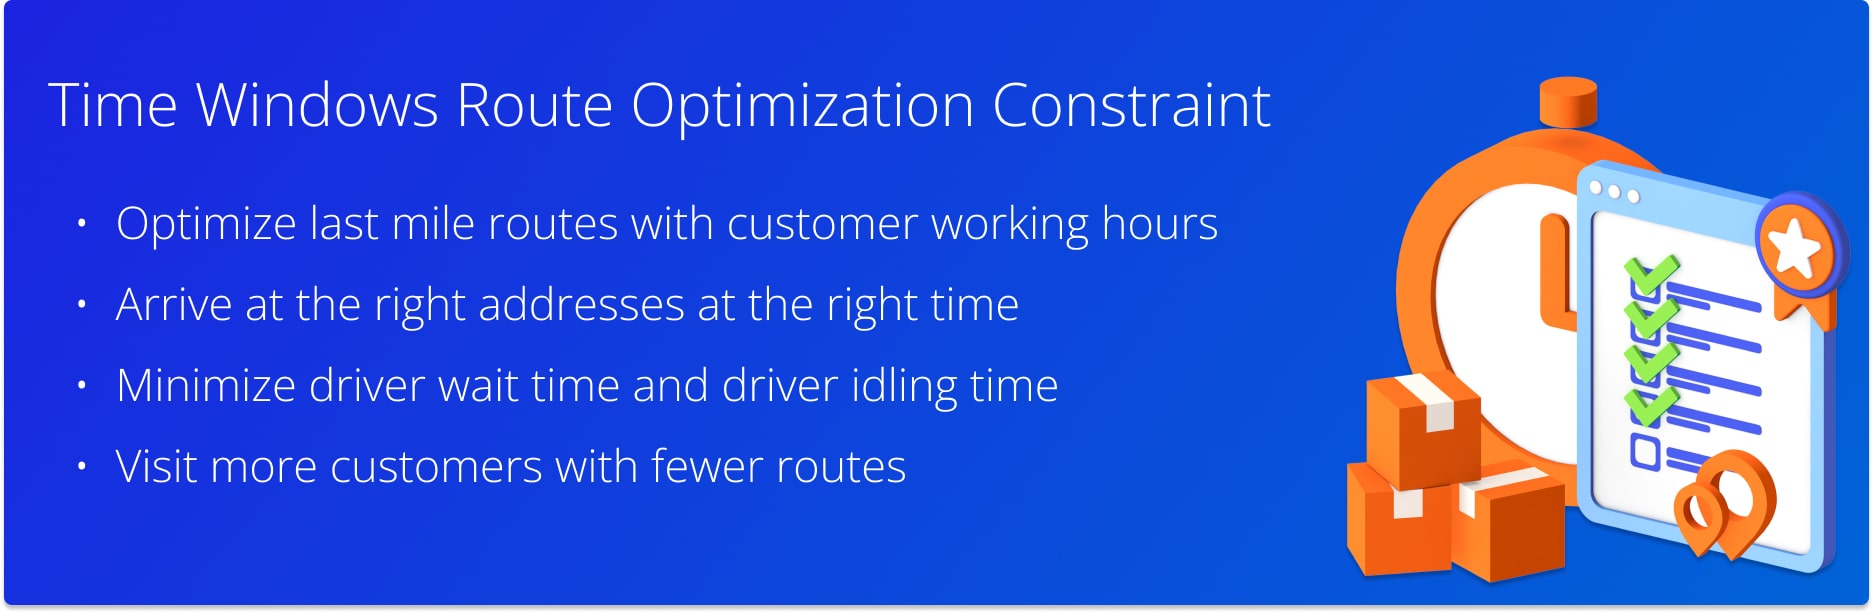 Route4Me Customer Time Windows last mile route optimization constraint.